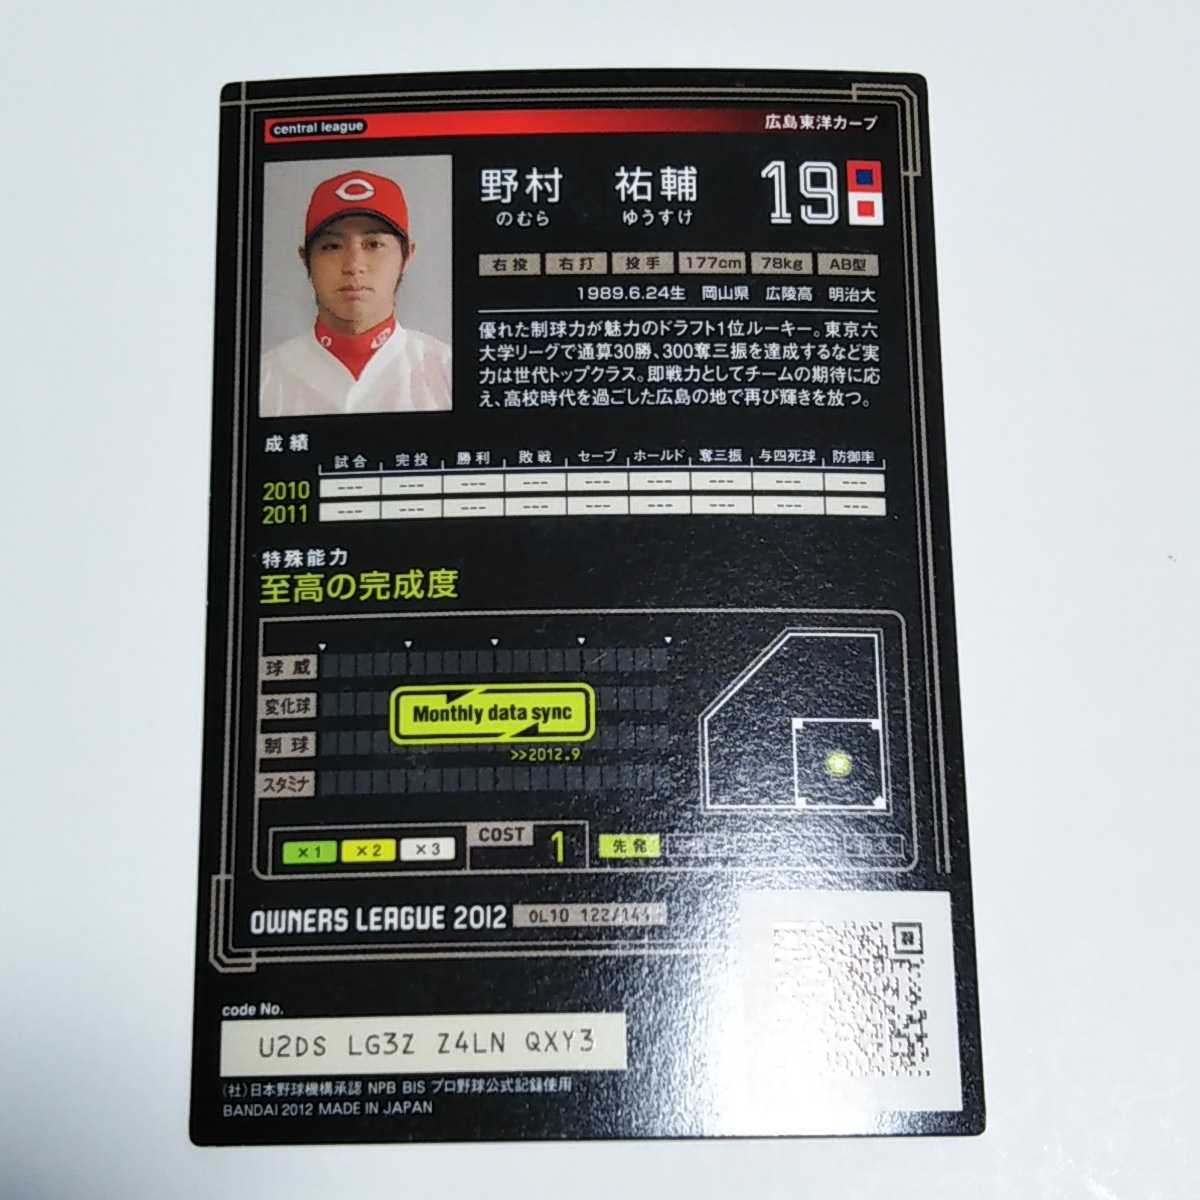  Professional Baseball Owners League OL10 Hiroshima ....IN card 